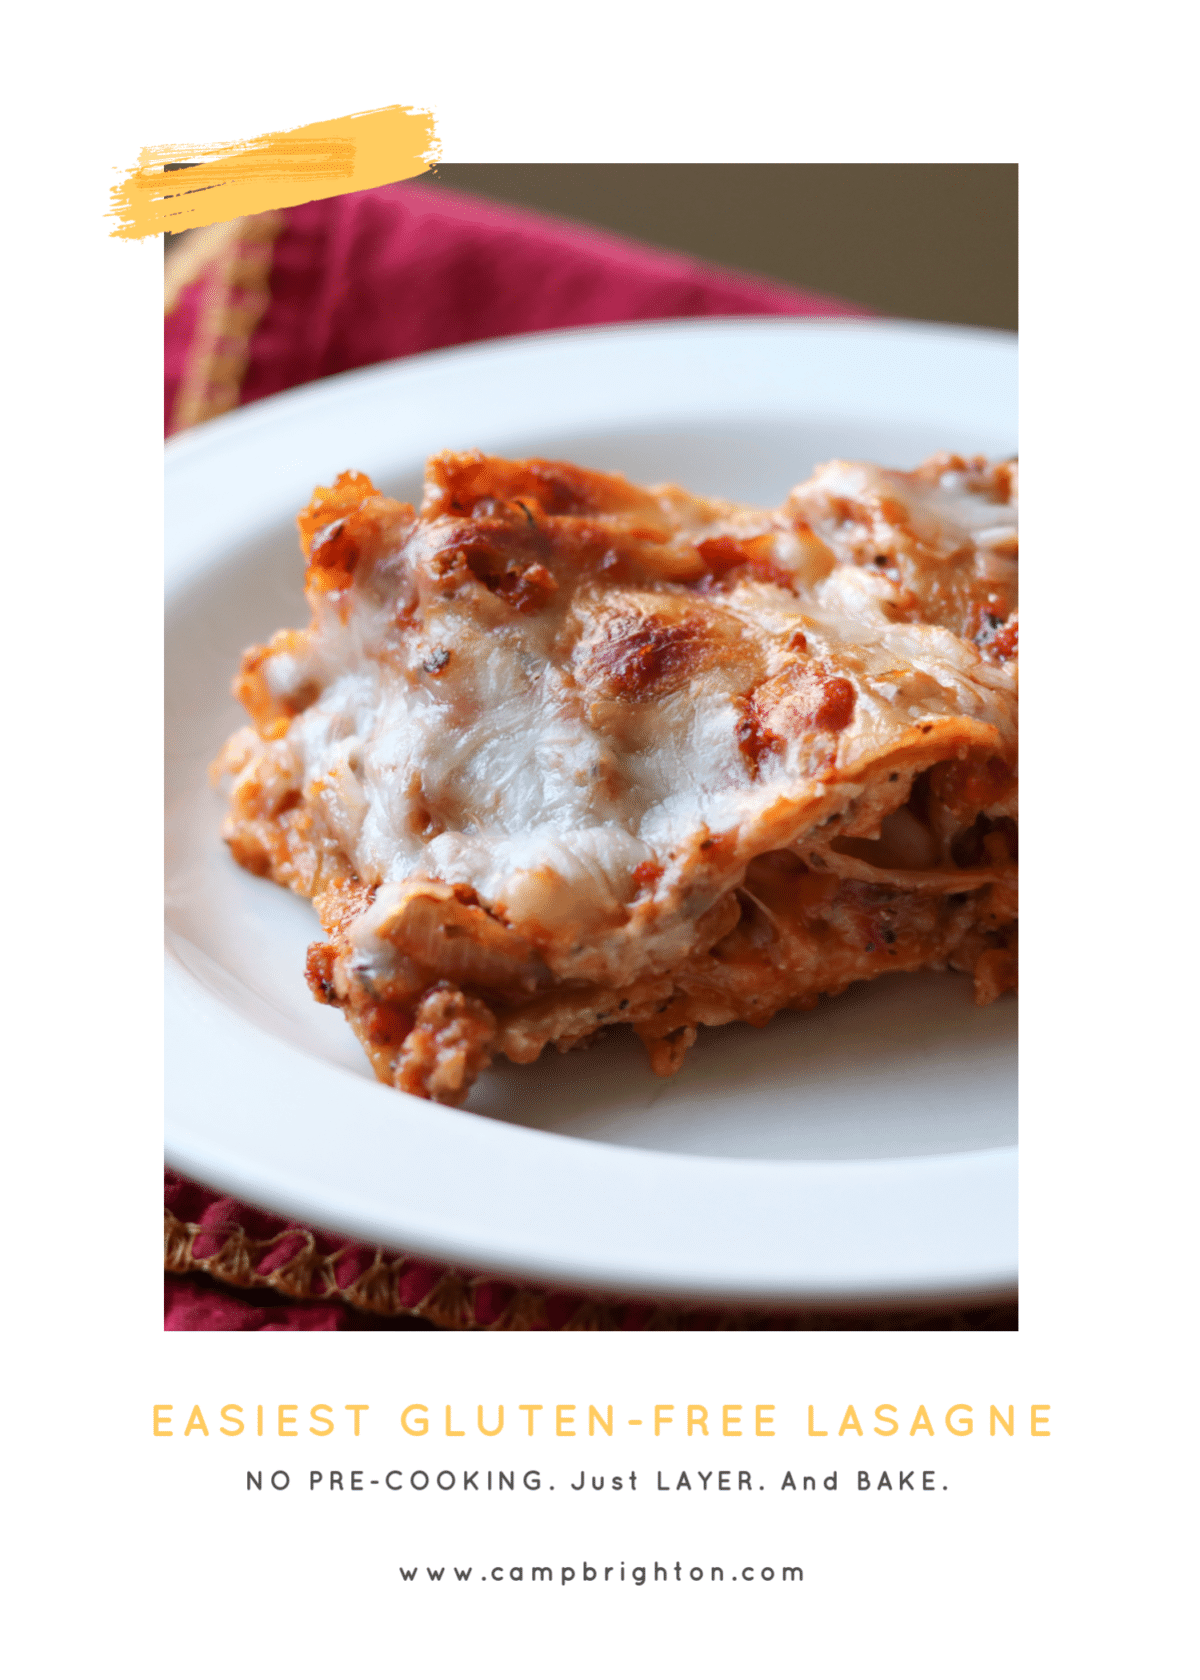 gluten-free lasagne long image